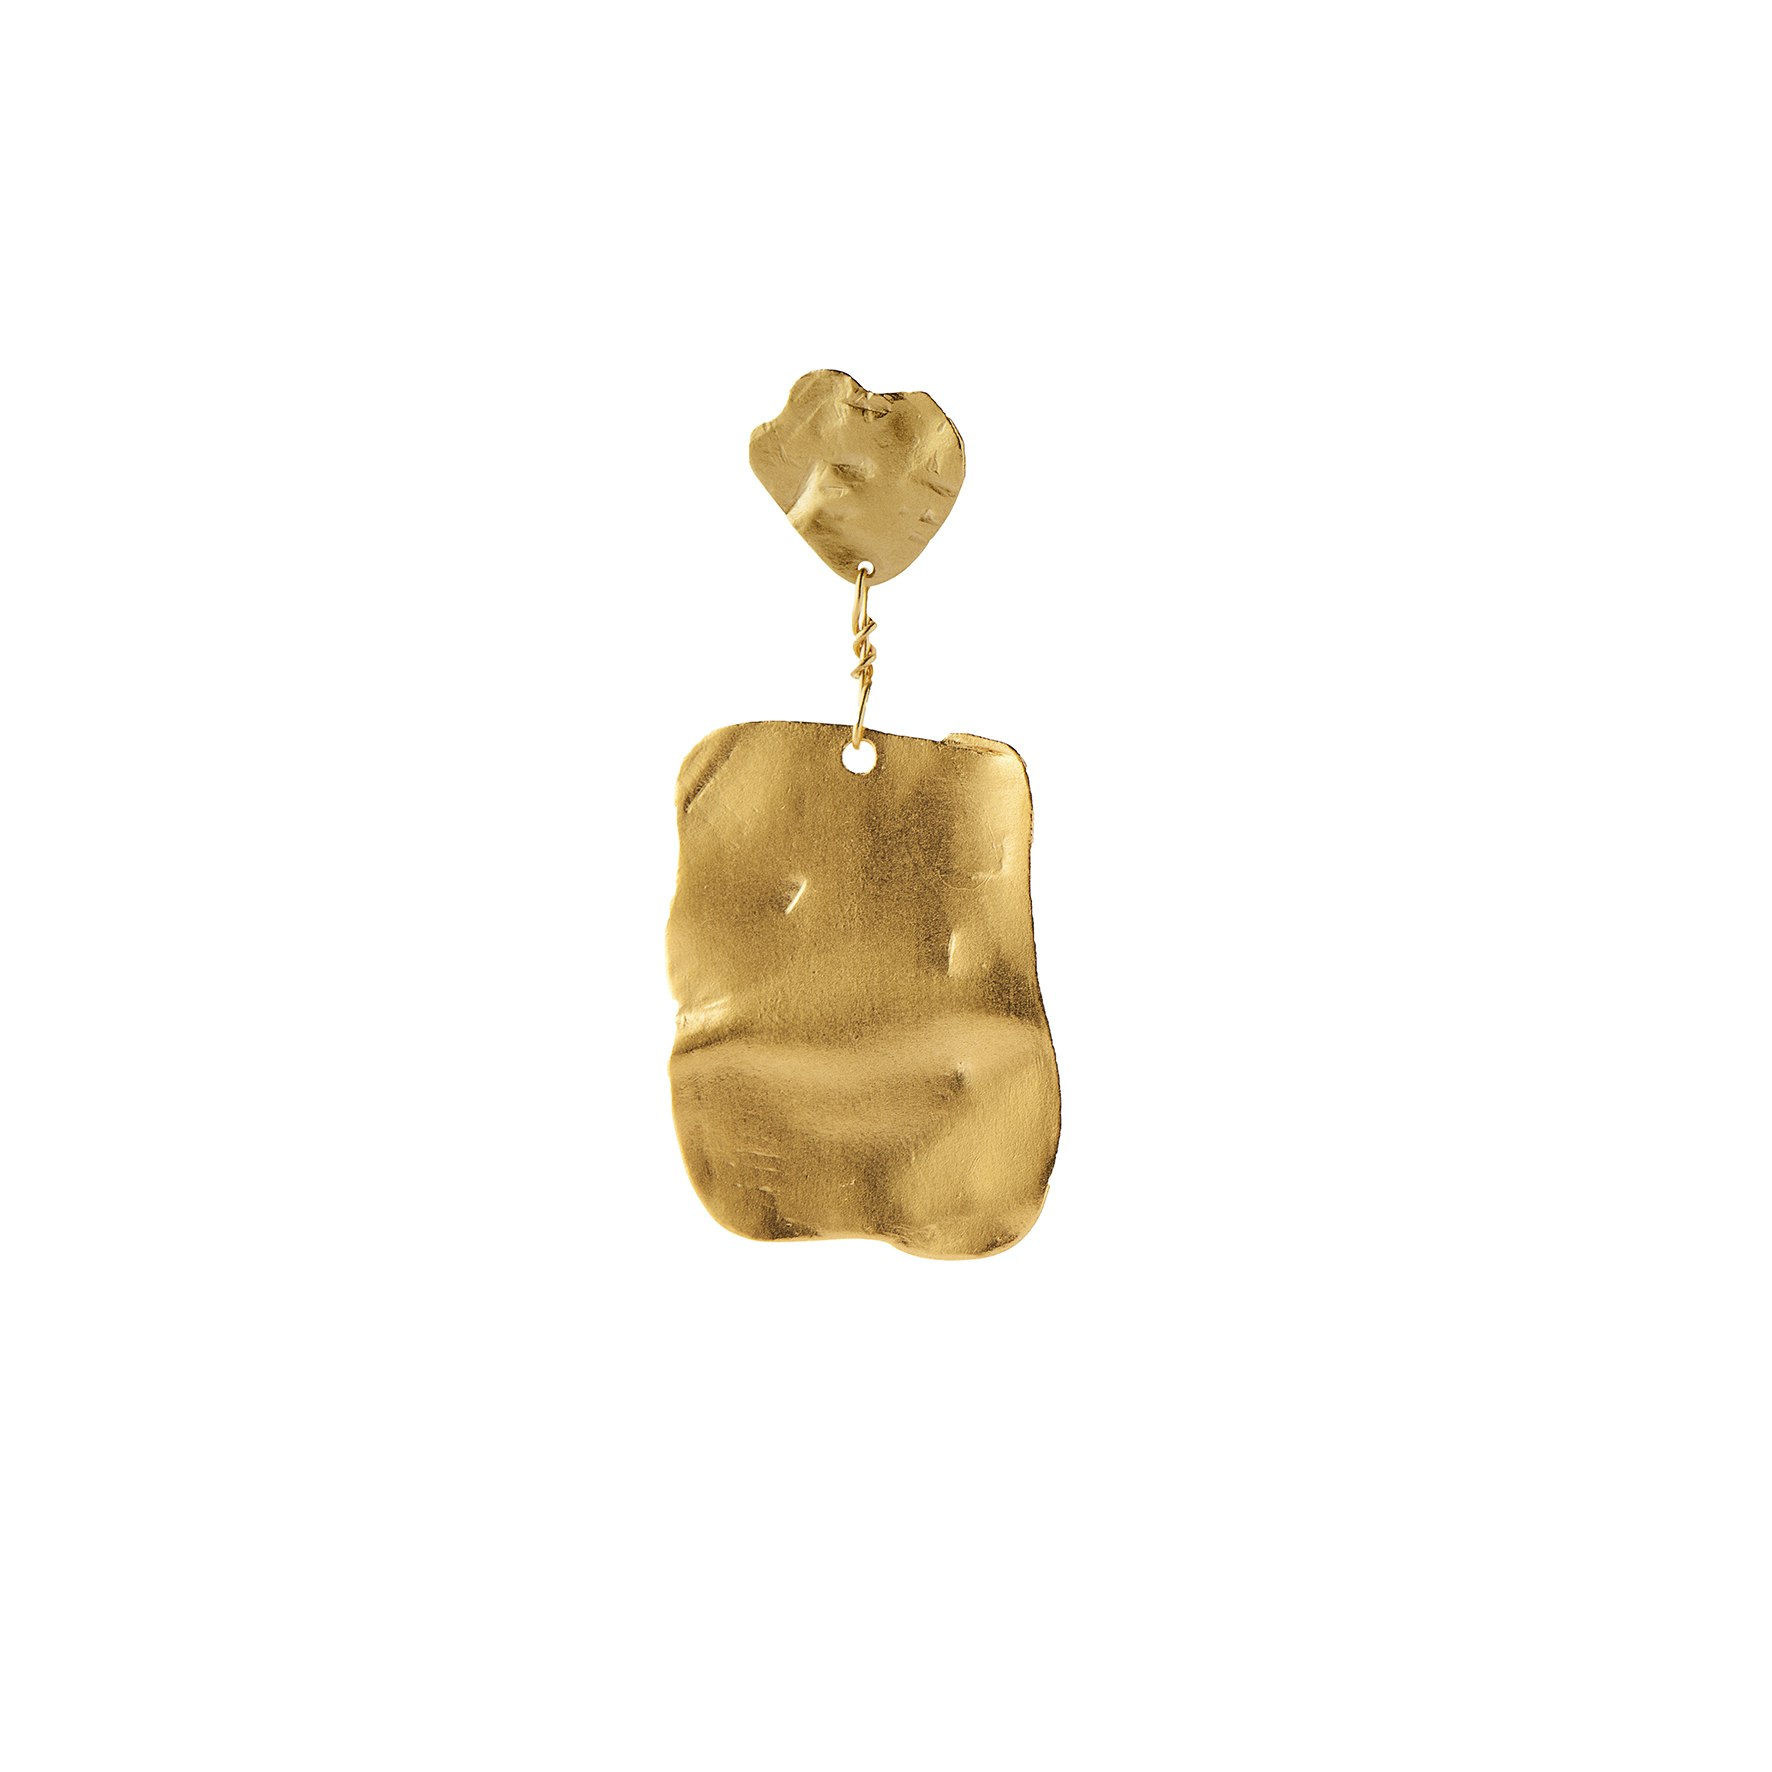 Golden Reflection Earring från STINE A Jewelry i Förgyllt-Silver Sterling 925